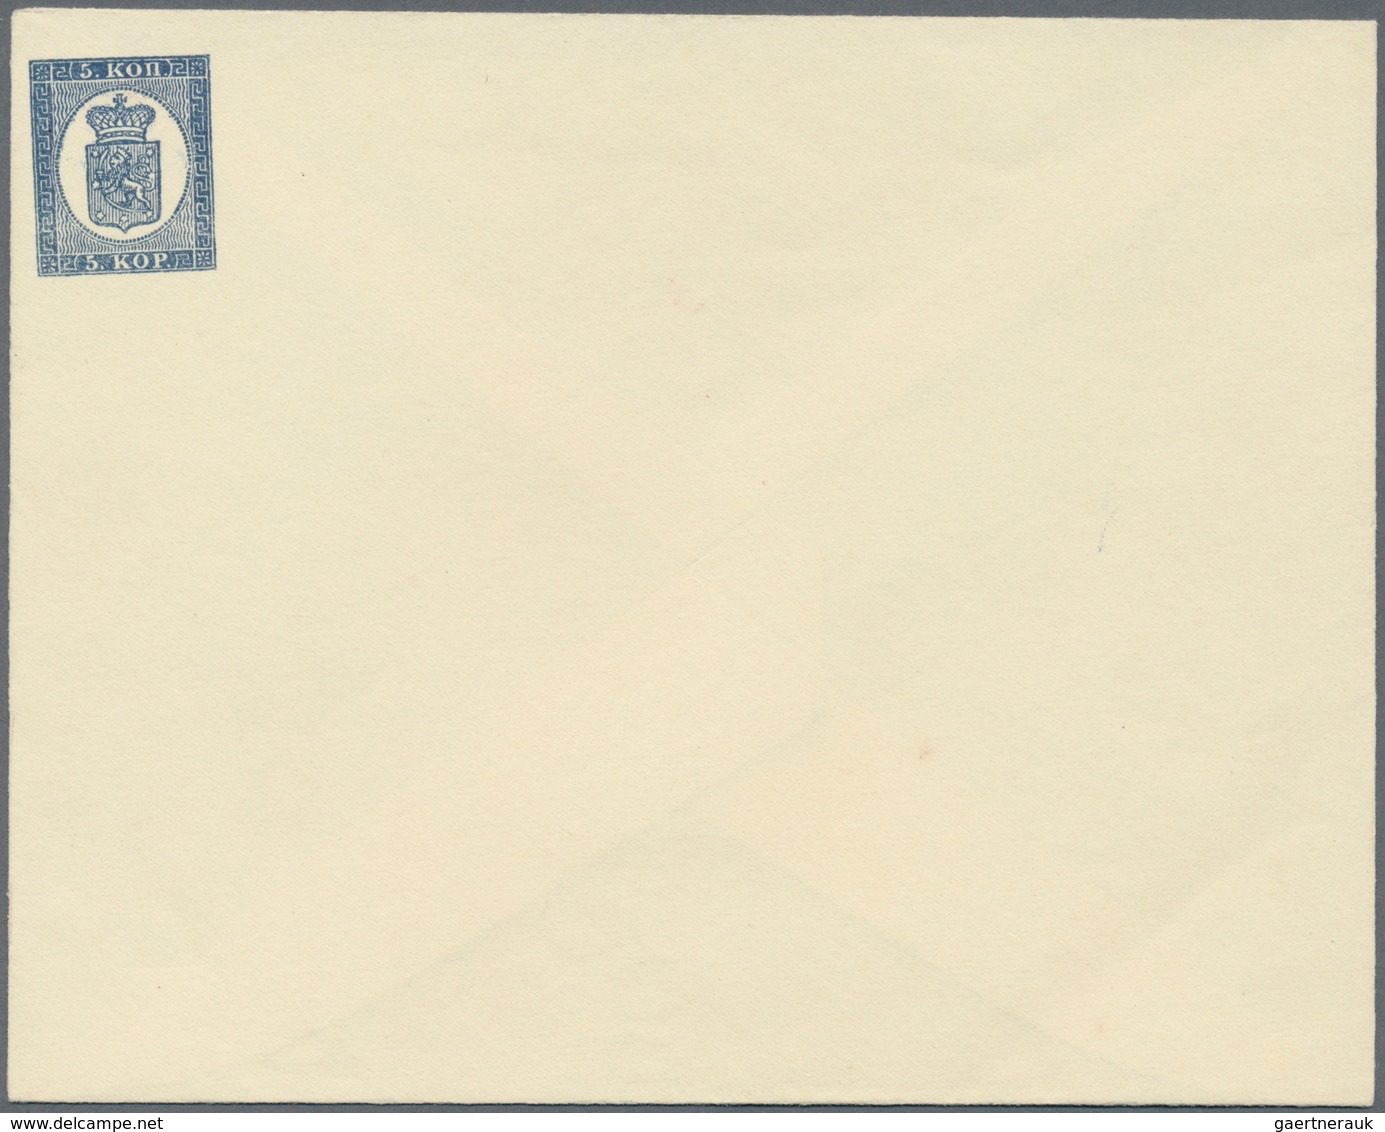 Finnland - Ganzsachen: 1860, 5 Kop. Blue Postal Stationery Cover Unused, On Reverse Flap-postmark 10 - Ganzsachen